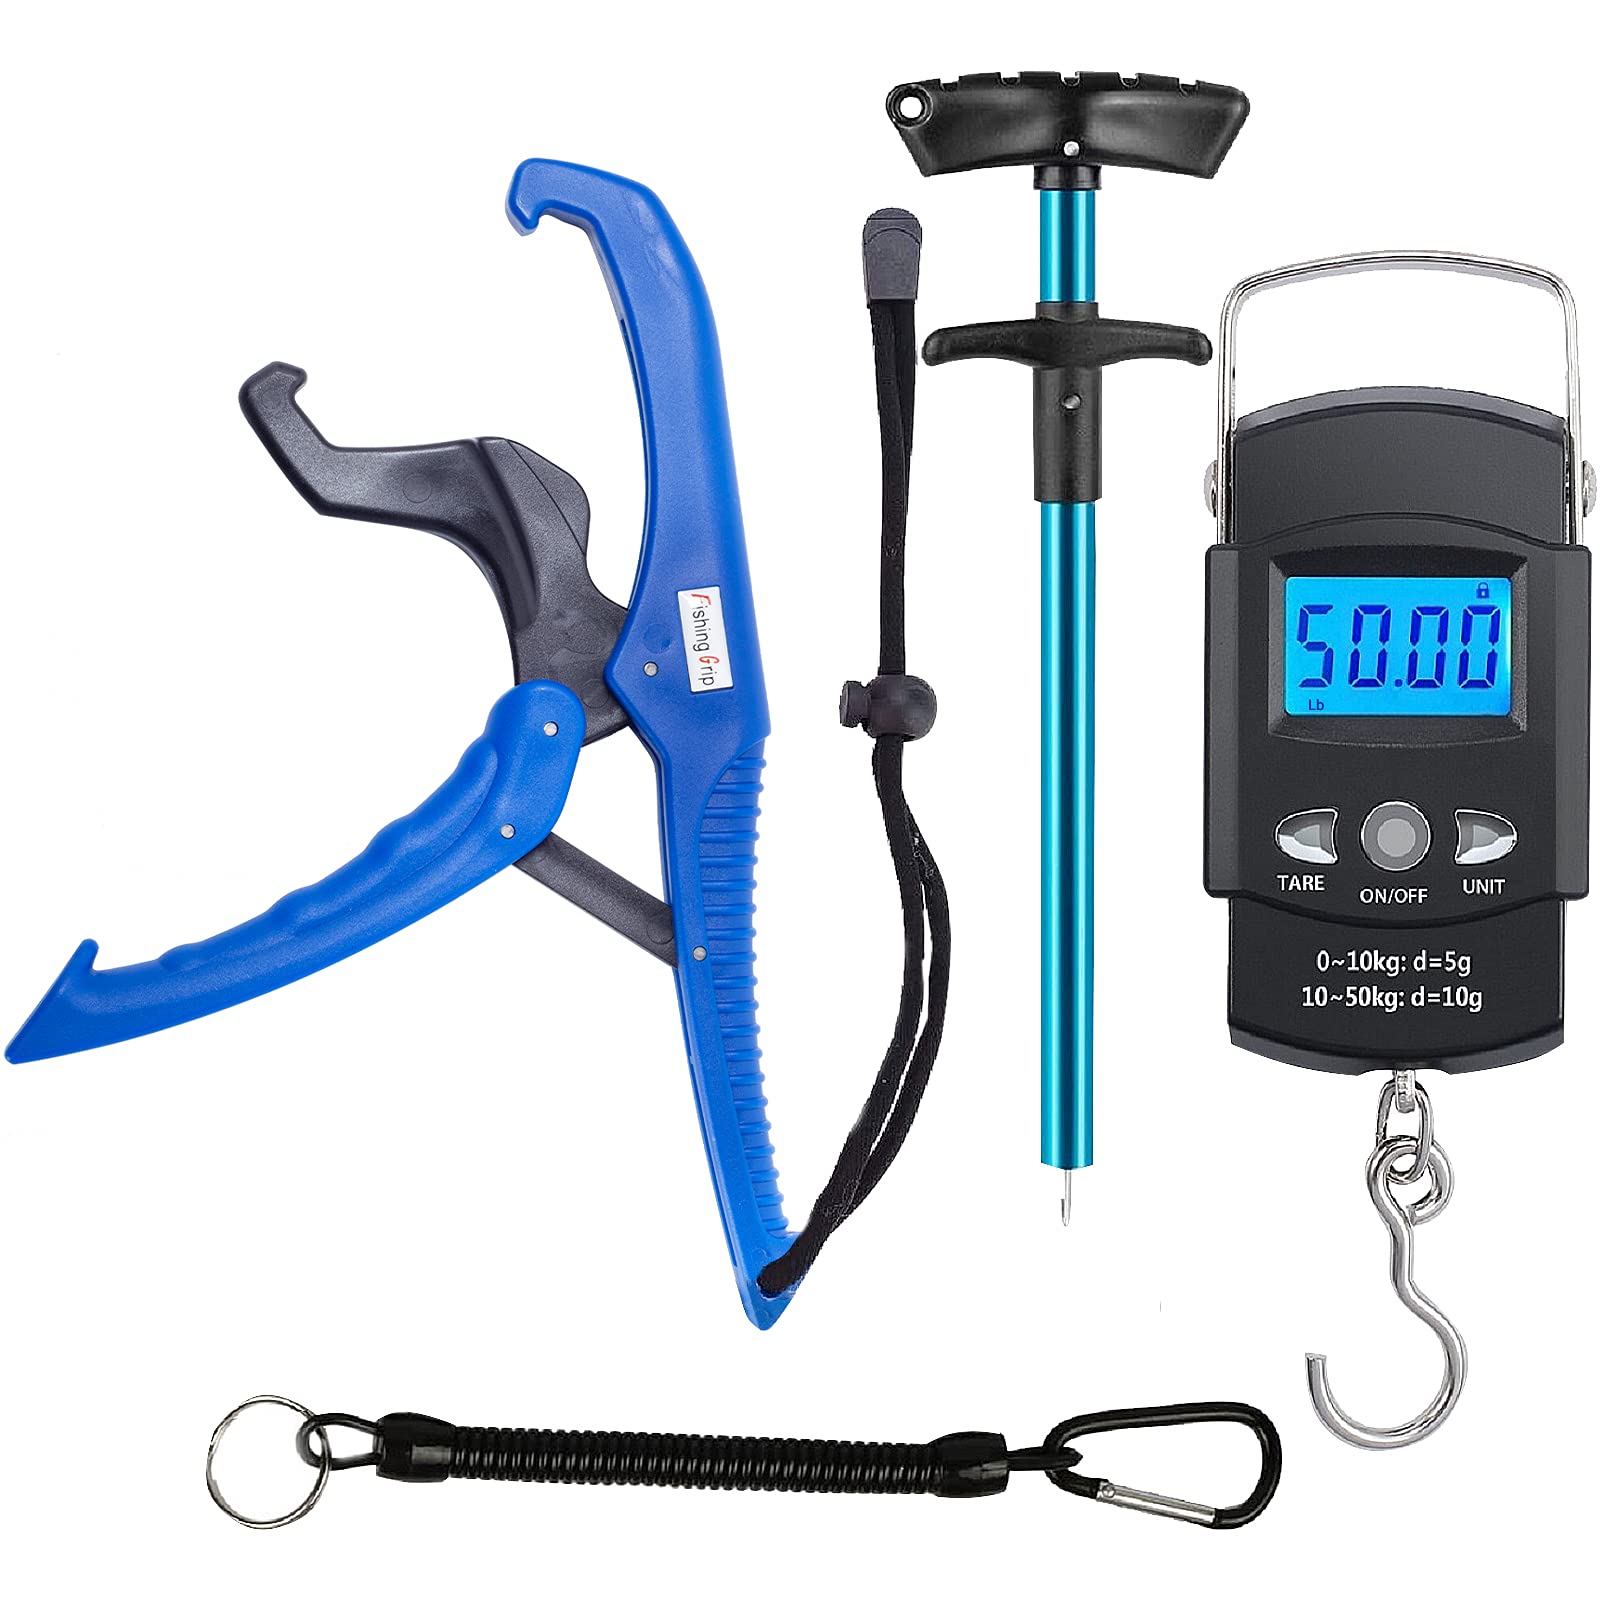 Honoson Fish Hook Remover Tools Kit Include 1 Piece Handheld Digital Fish  Scale 1 Piece Fish Hook Remover Tool 1 Piece Fish Lip Gripper